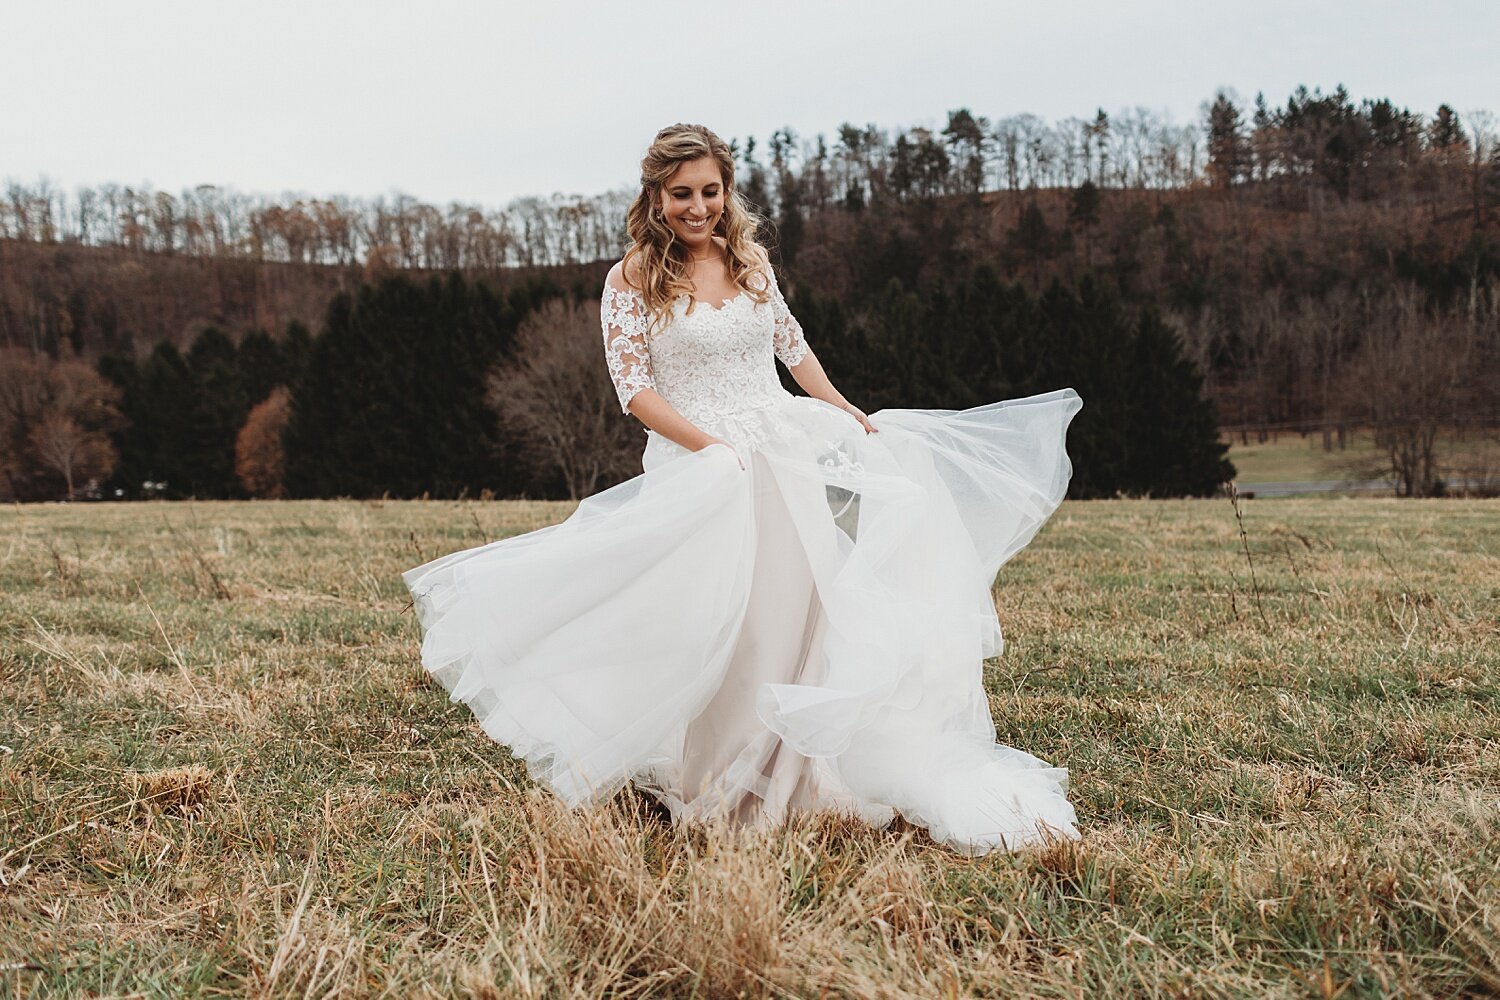 Grove at Kempton Wedding Photographer bride twirling dress portrait field barn Pennsylvania fall